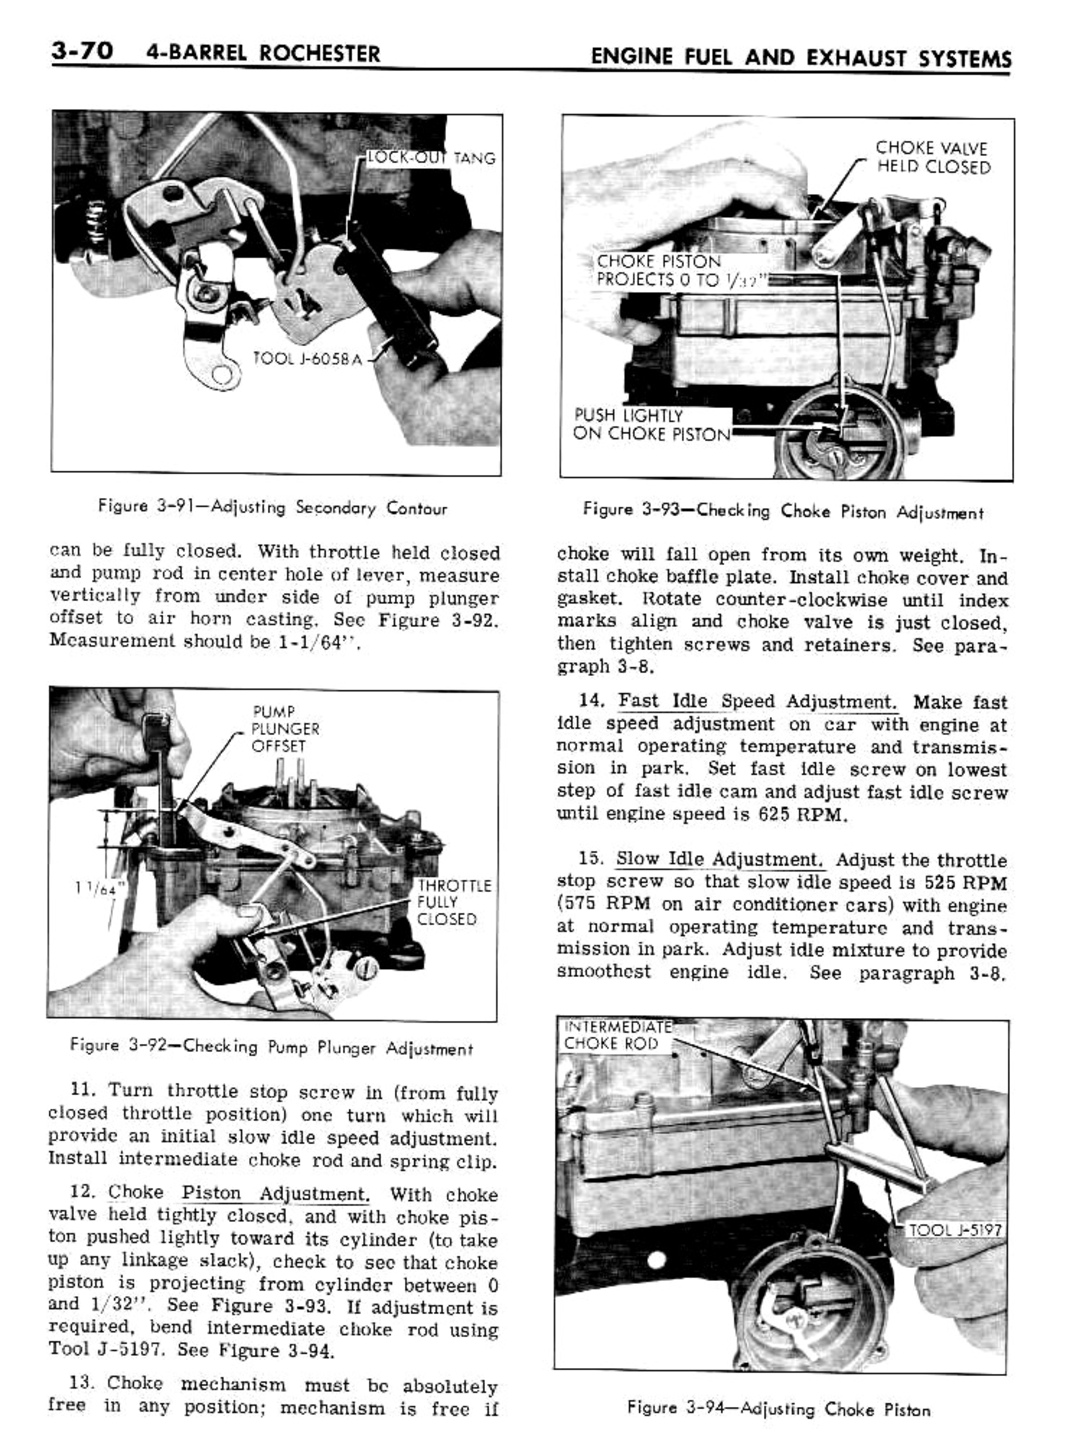 n_04 1961 Buick Shop Manual - Engine Fuel & Exhaust-070-070.jpg